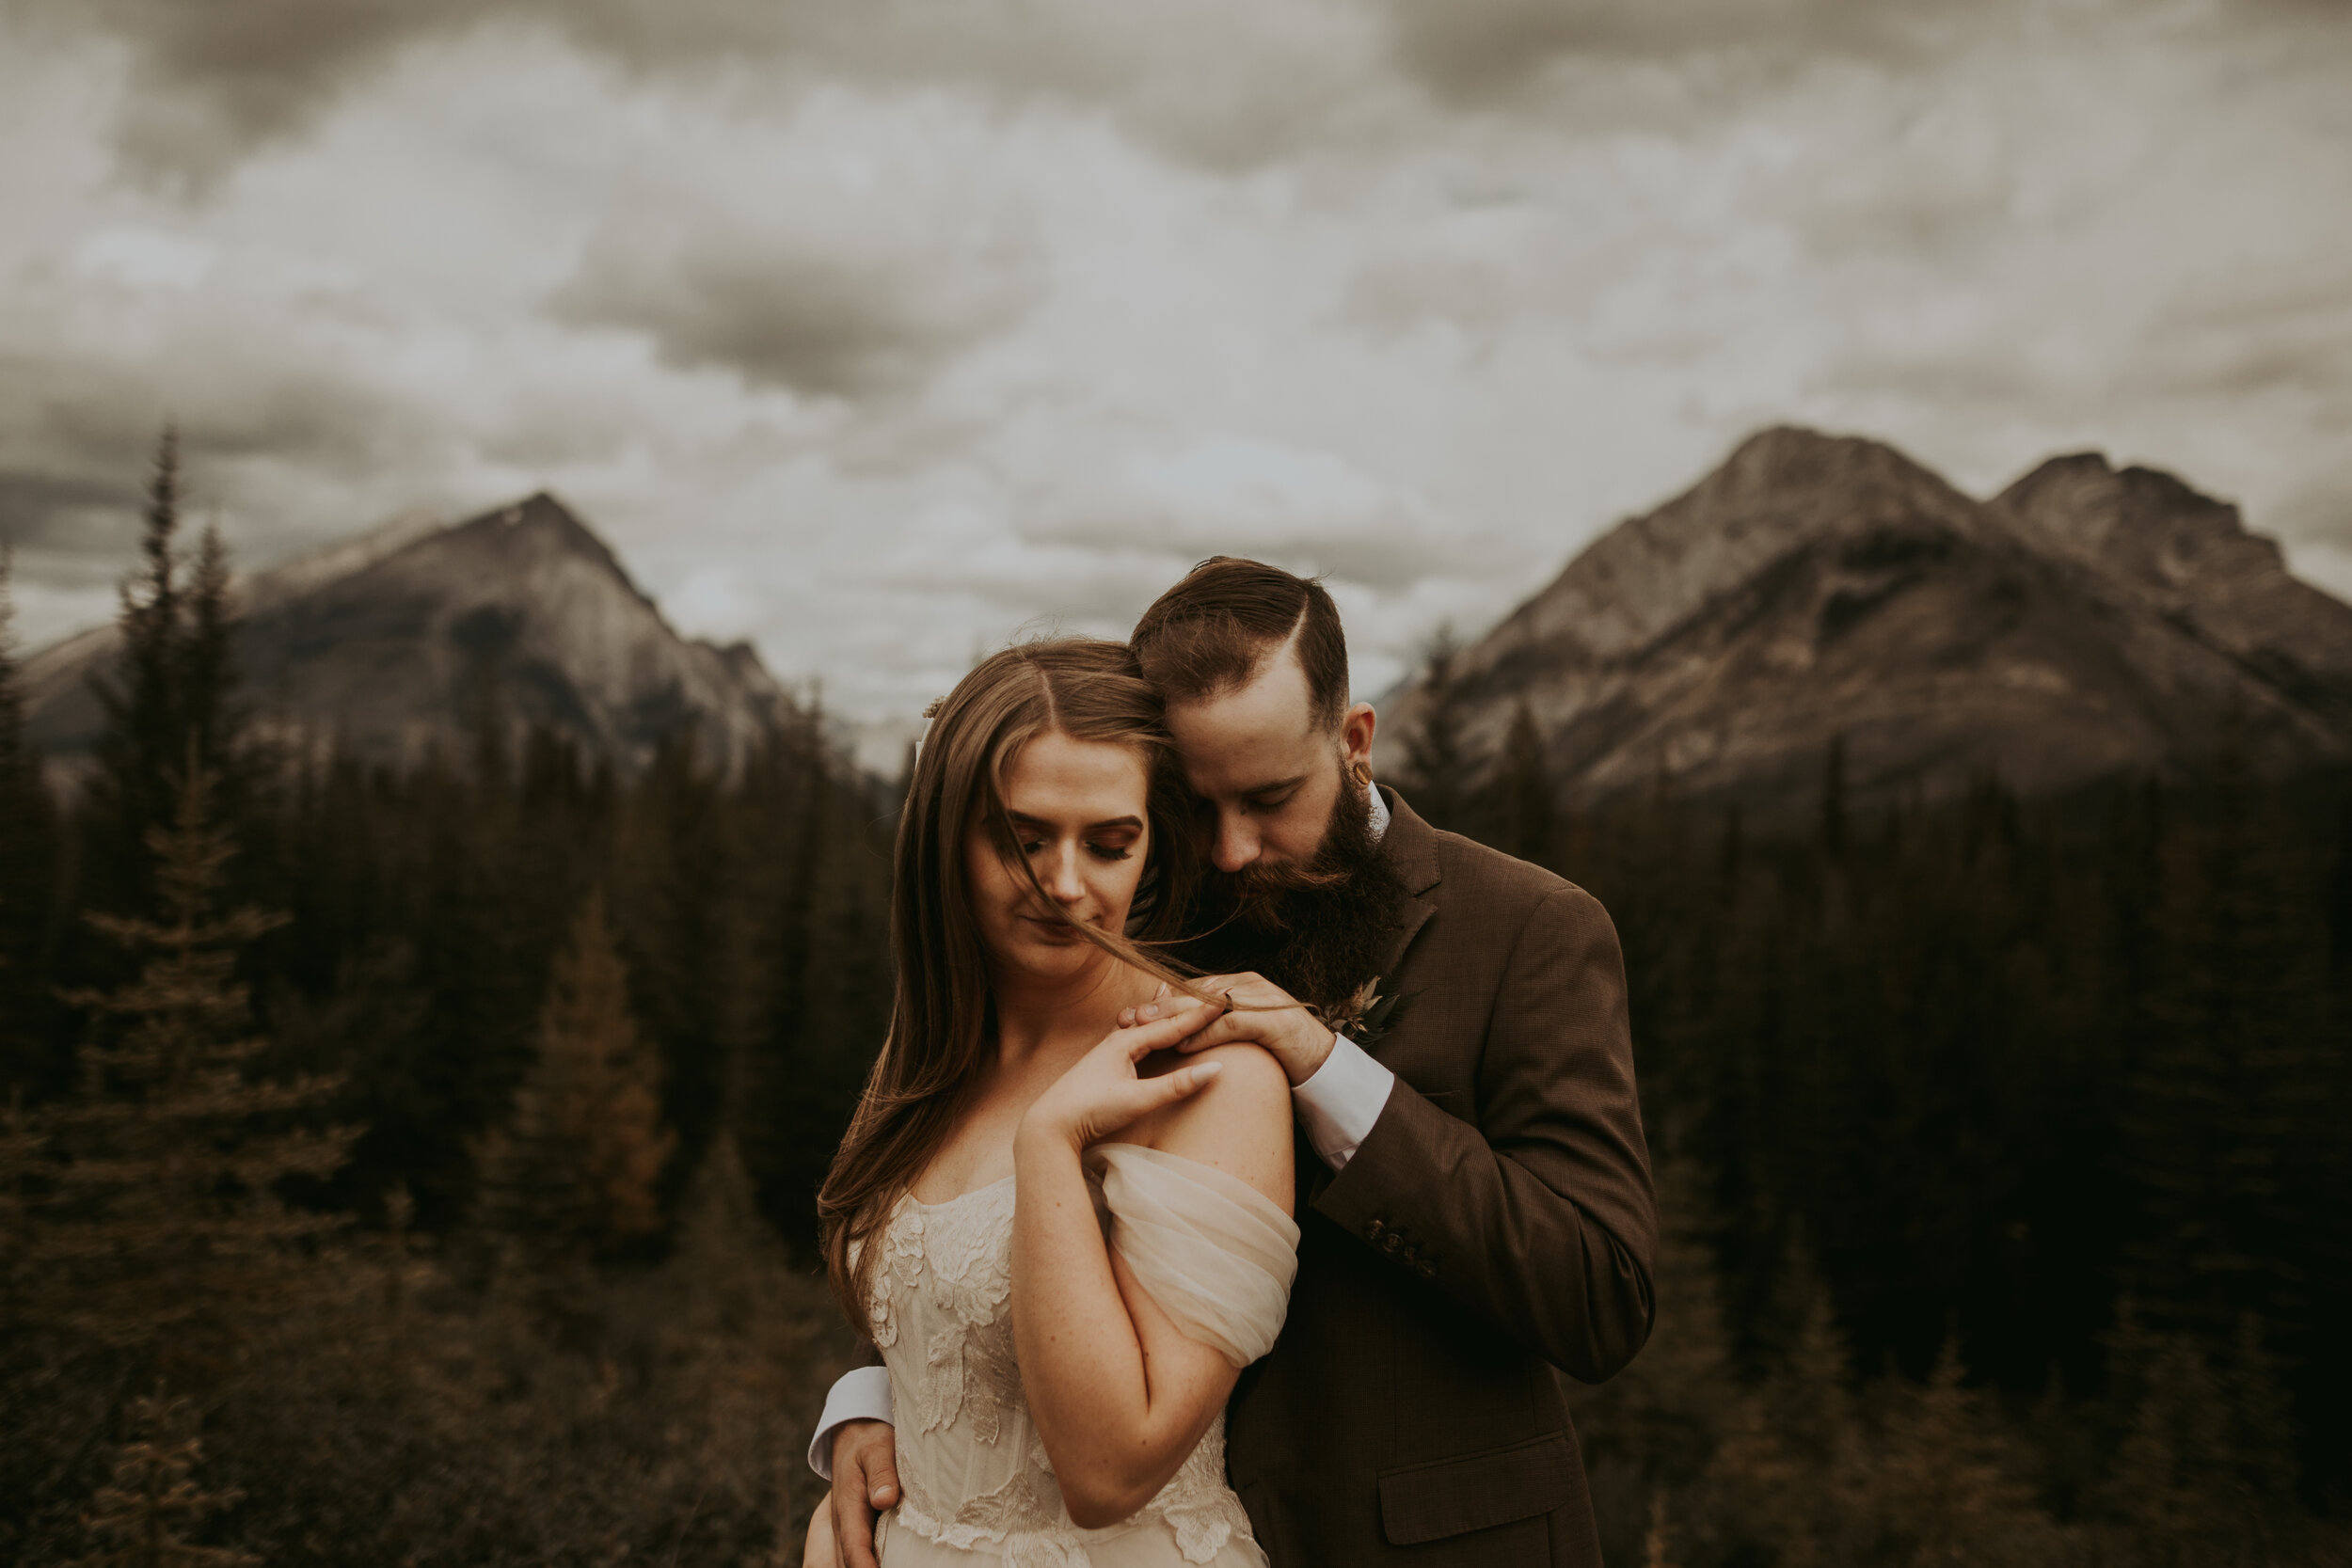 Calgary Elopement Photographer, Calgary Elopement, Calgary wedding photographer, Calgary Elopement locations